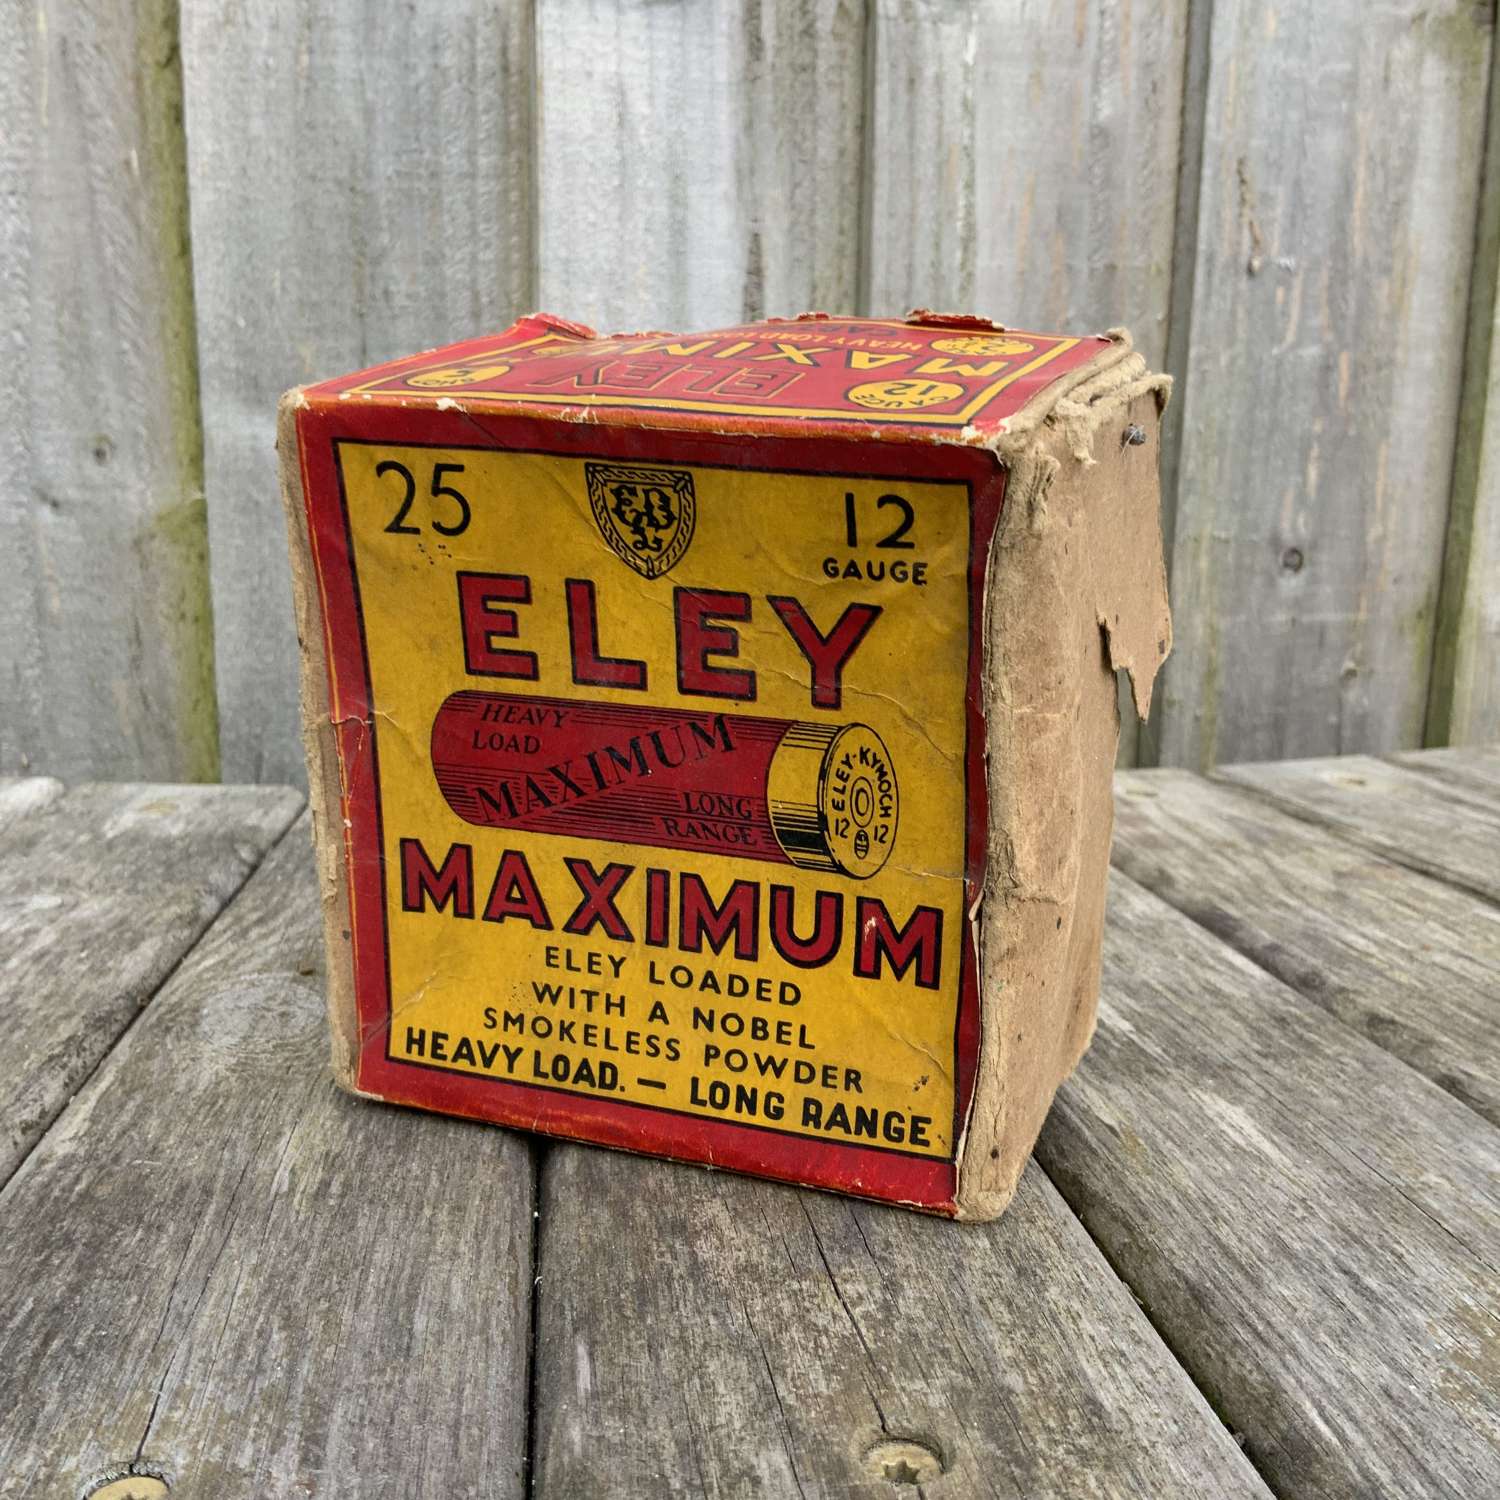 Early eley maximum 25 pack 12 gauge shotgun cartridge box